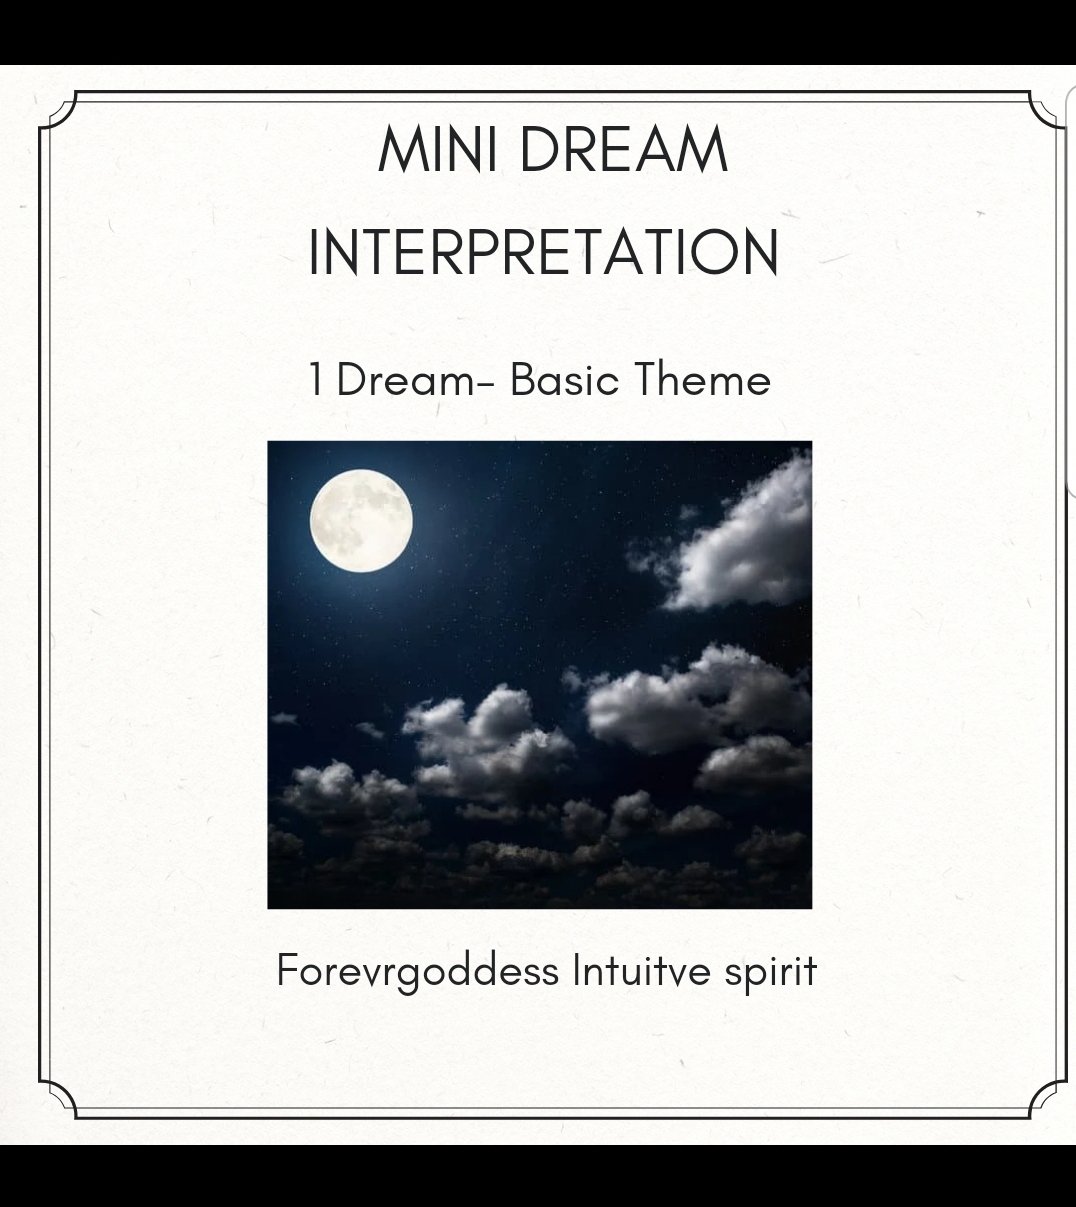 Mini dream interpretation